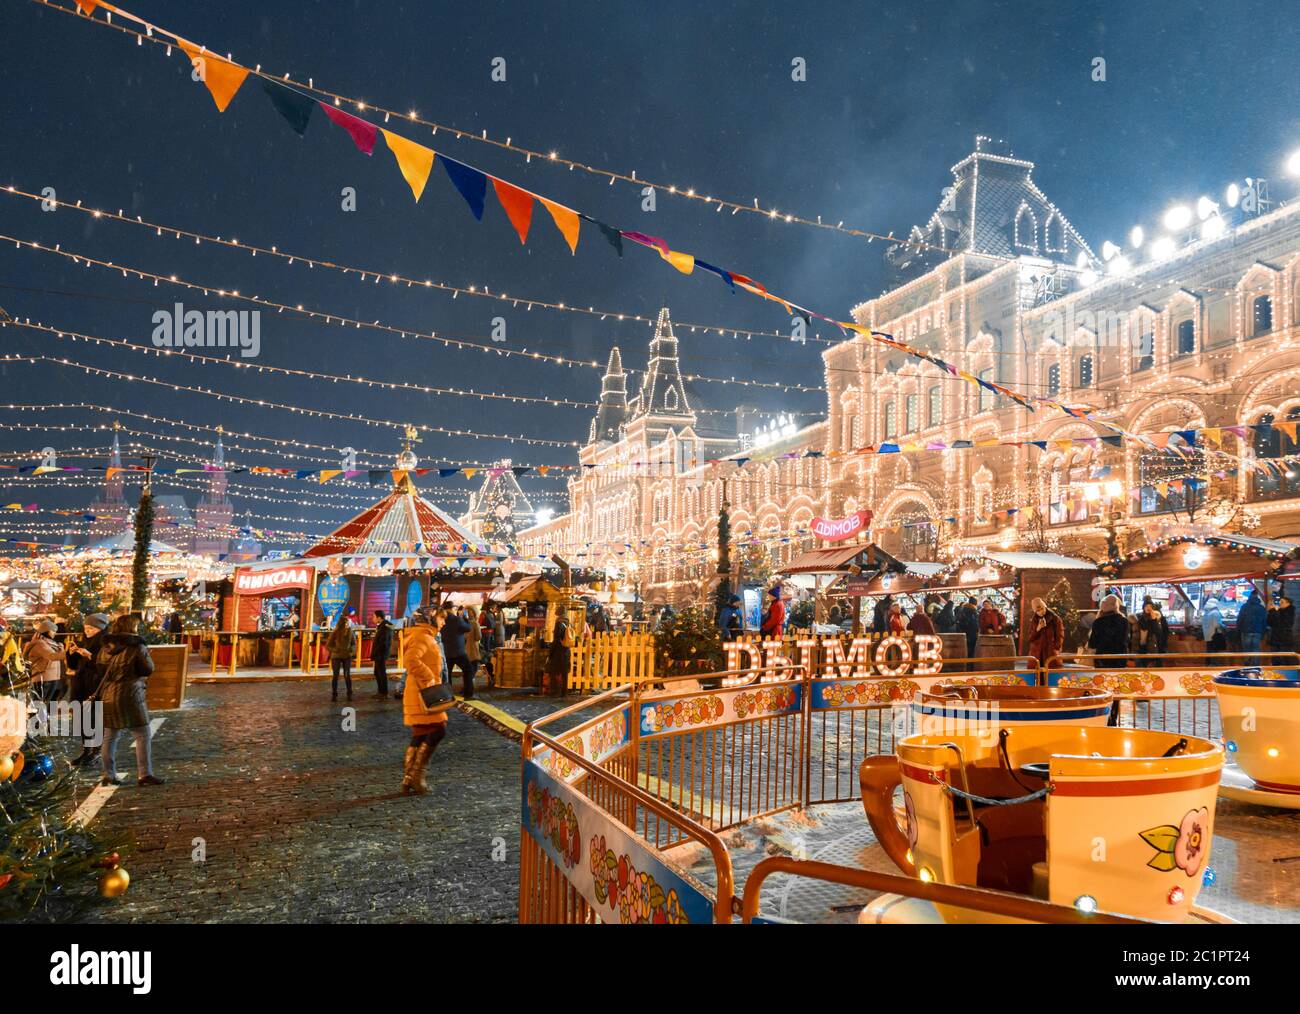 Moscú, Rusia - Diciembre 5, 2017: árbol de Navidad de la casa comercial GUM en la Plaza Roja en Moscú, Rusia Foto de stock